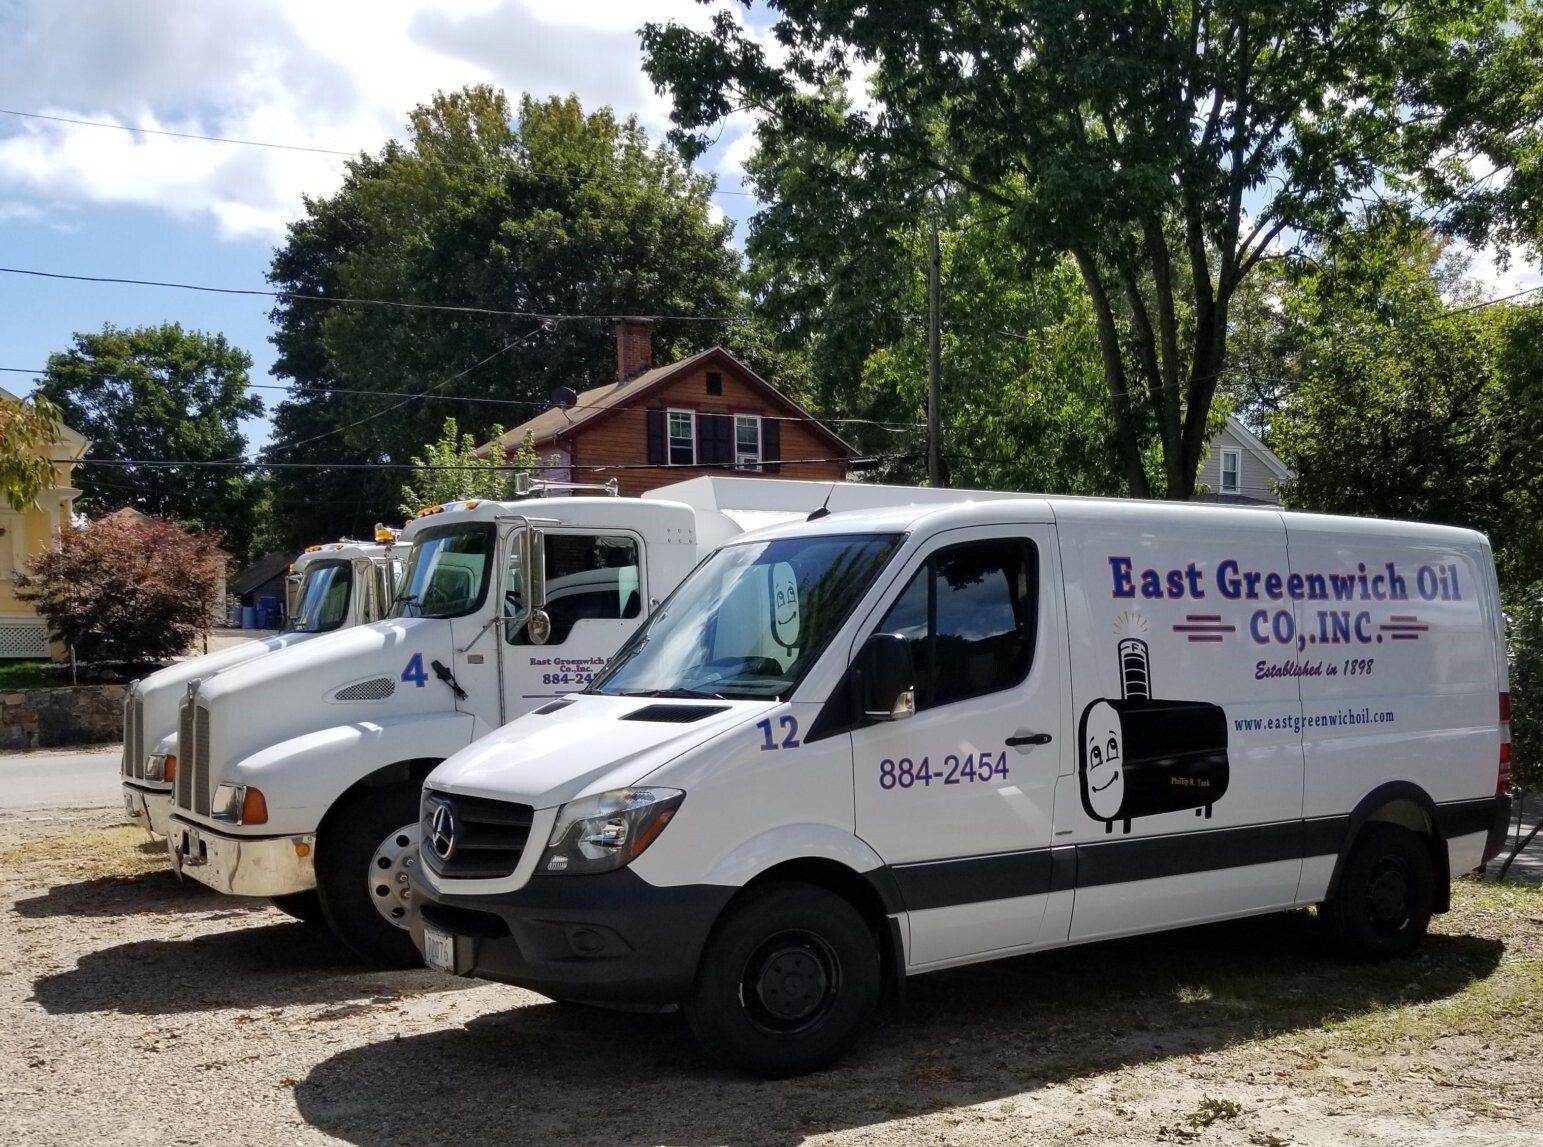 East Greenwich Oil Co, Inc vehicles